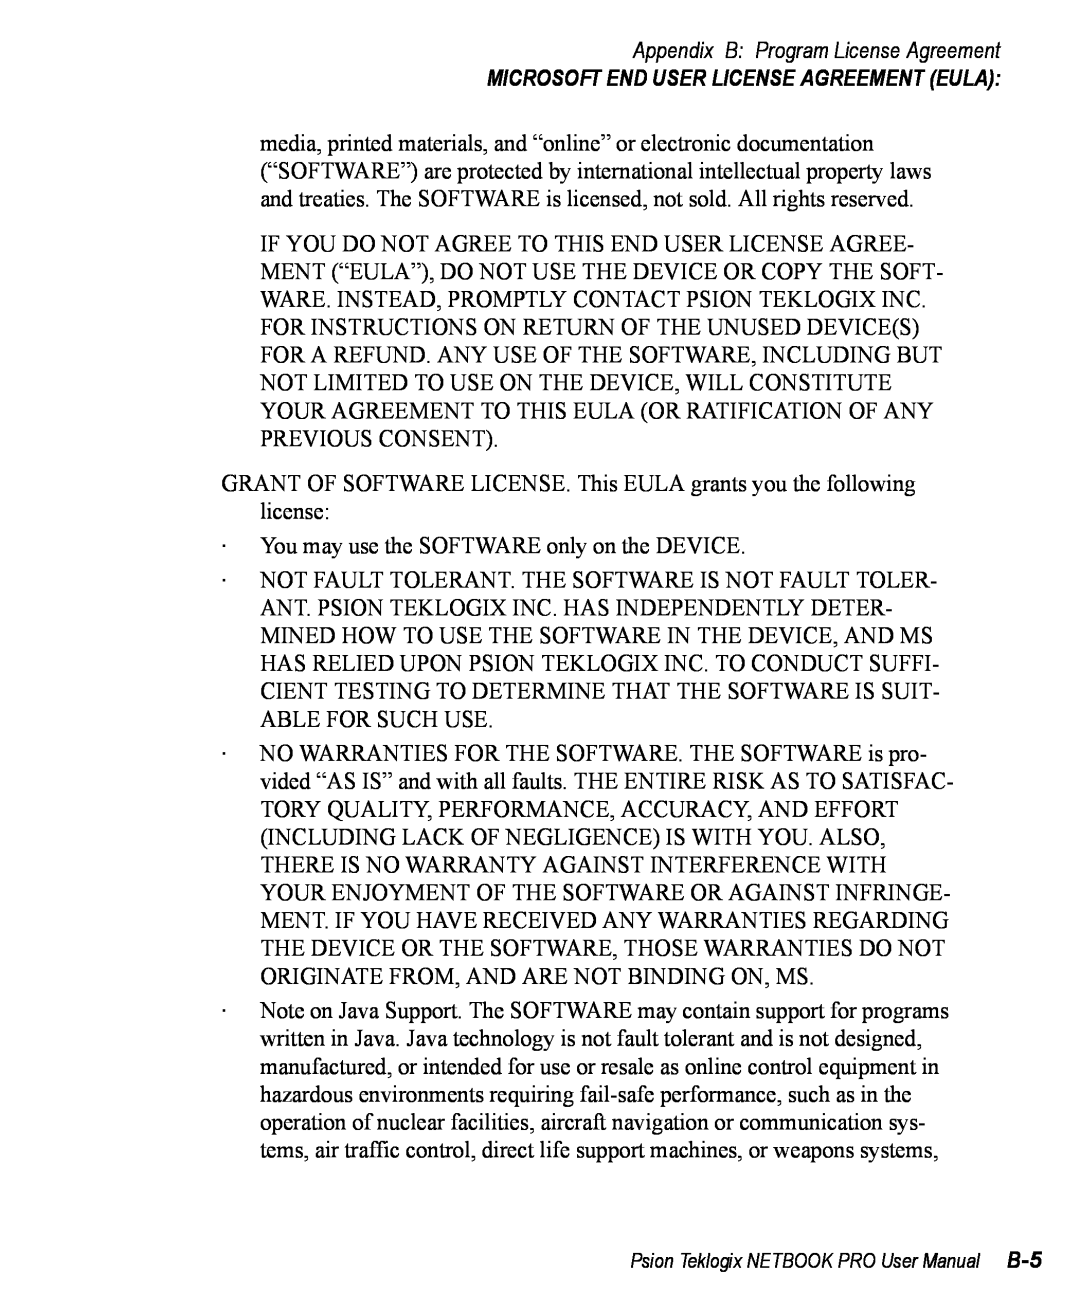 Psion Teklogix Win CE 4.2 user manual Appendix B Program License Agreement, Microsoft End User License Agreement Eula 